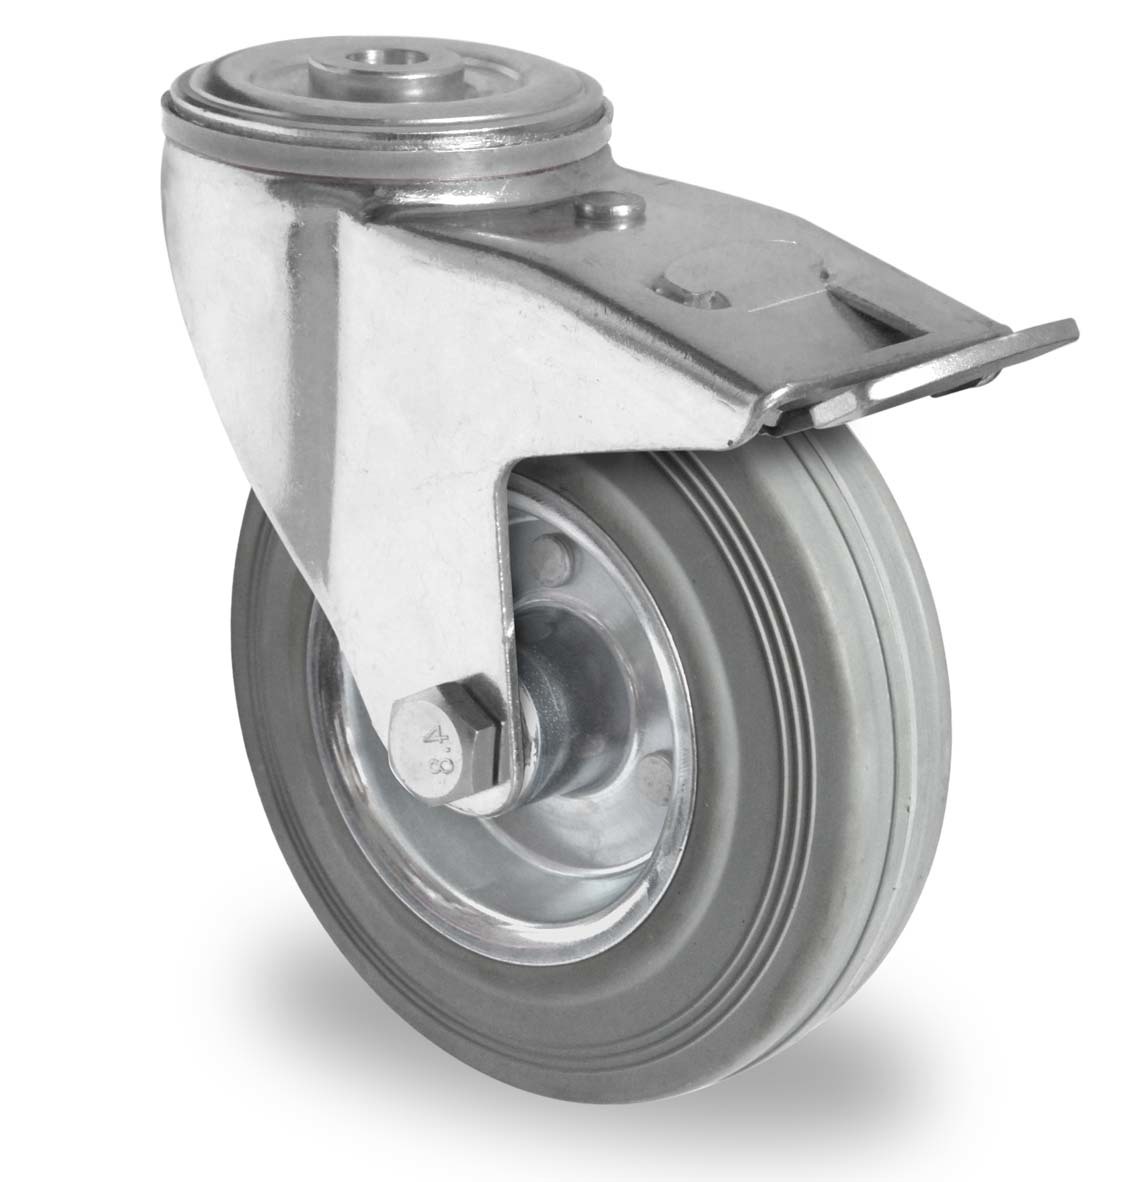 125 hollow brake roller needle core gray rubber wheel